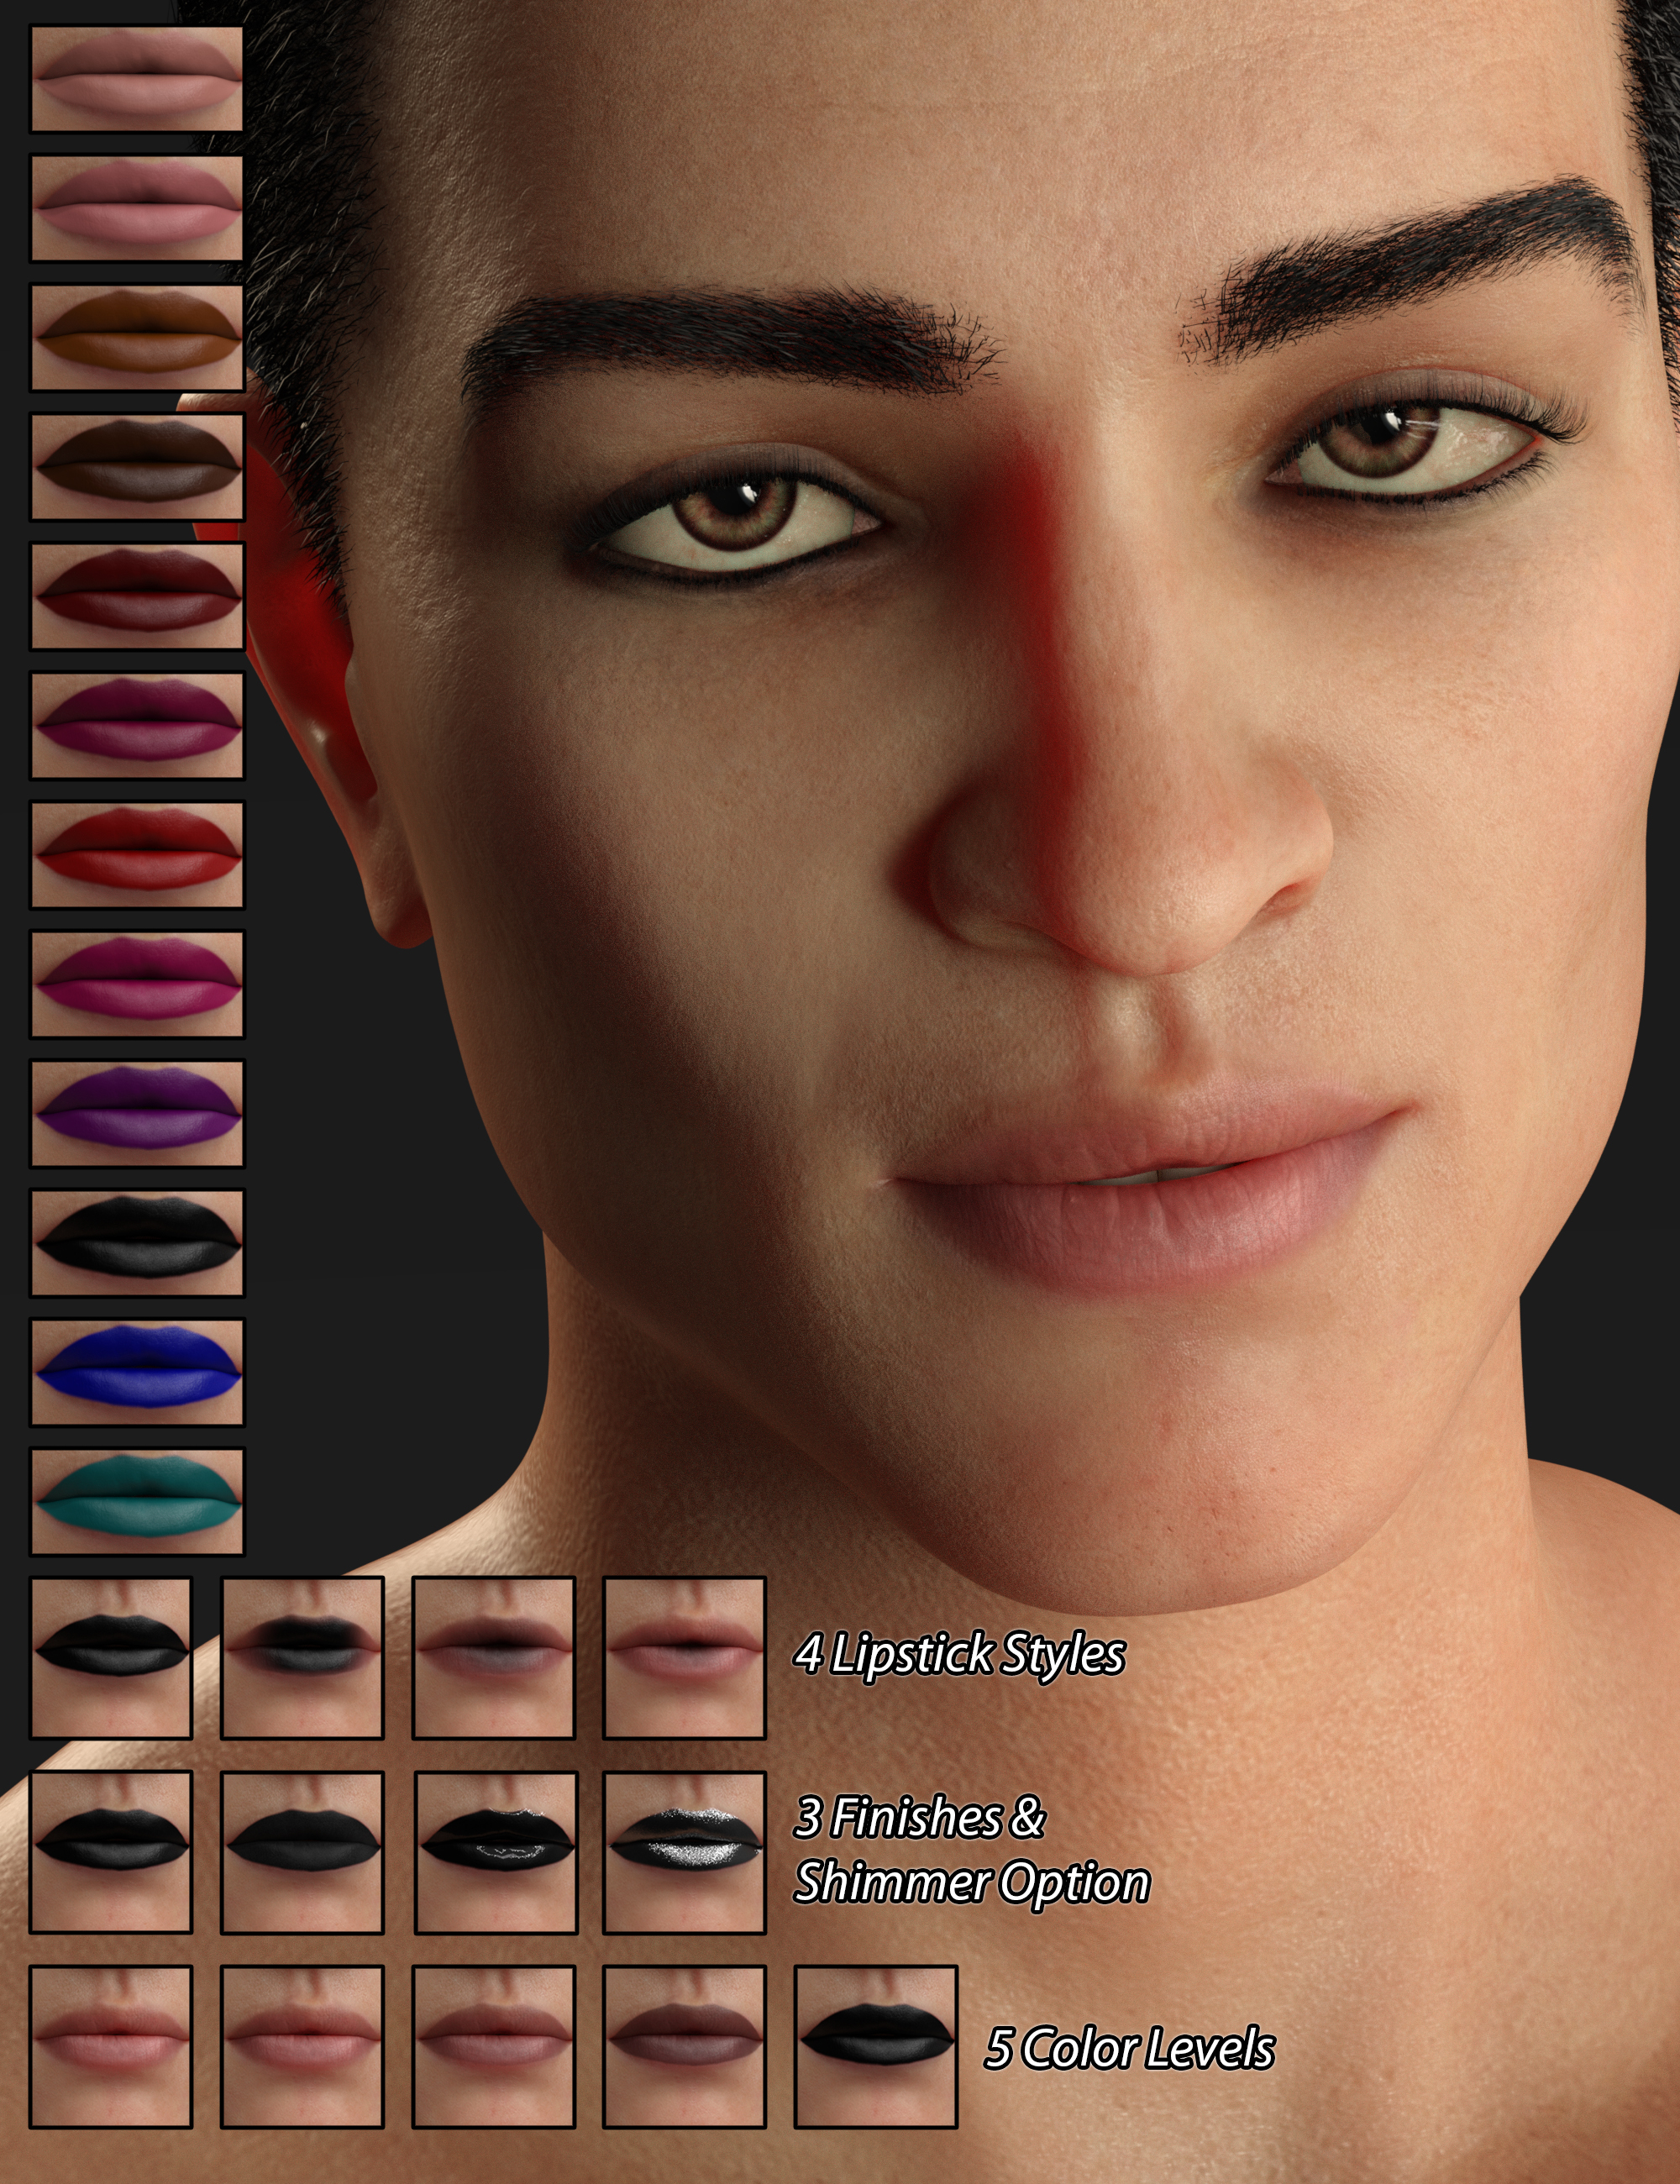 CC Zophael for Genesis 8 Male by: ChangelingChick, 3D Models by Daz 3D